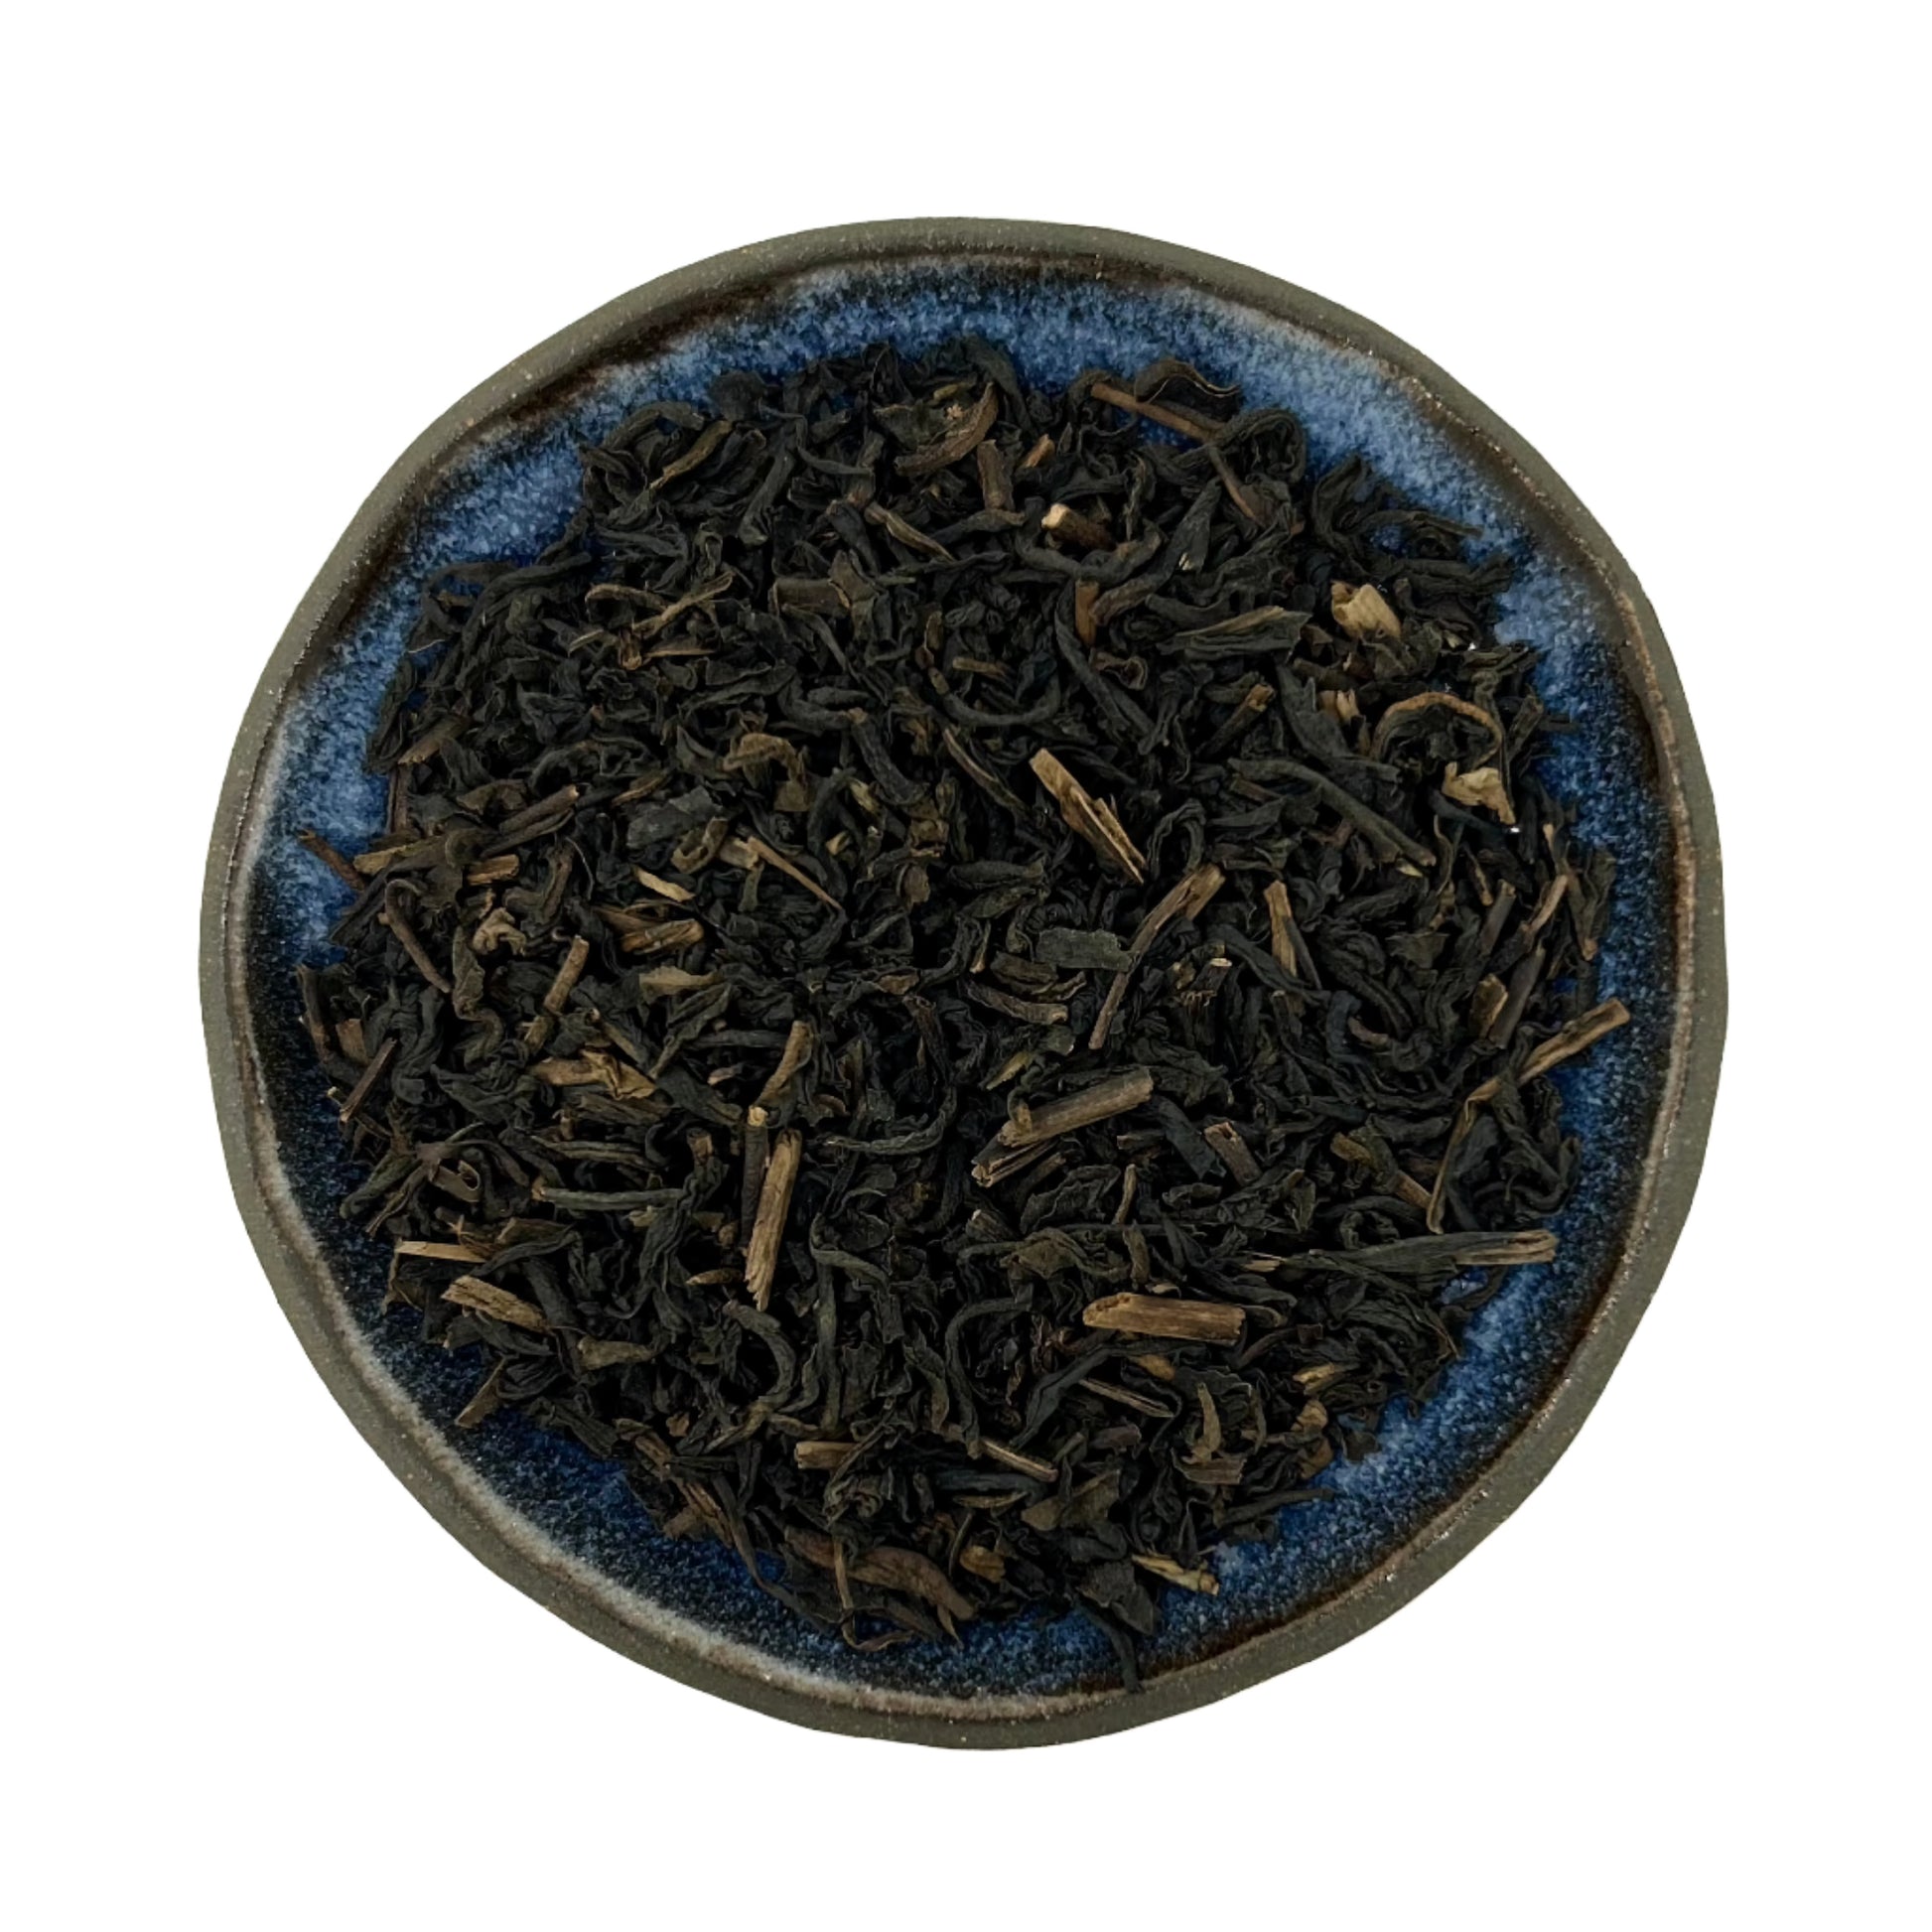 Decaf Earl Grey Loose Leaf Caffeine-free Earl Grey Black Tea, Loose Tea